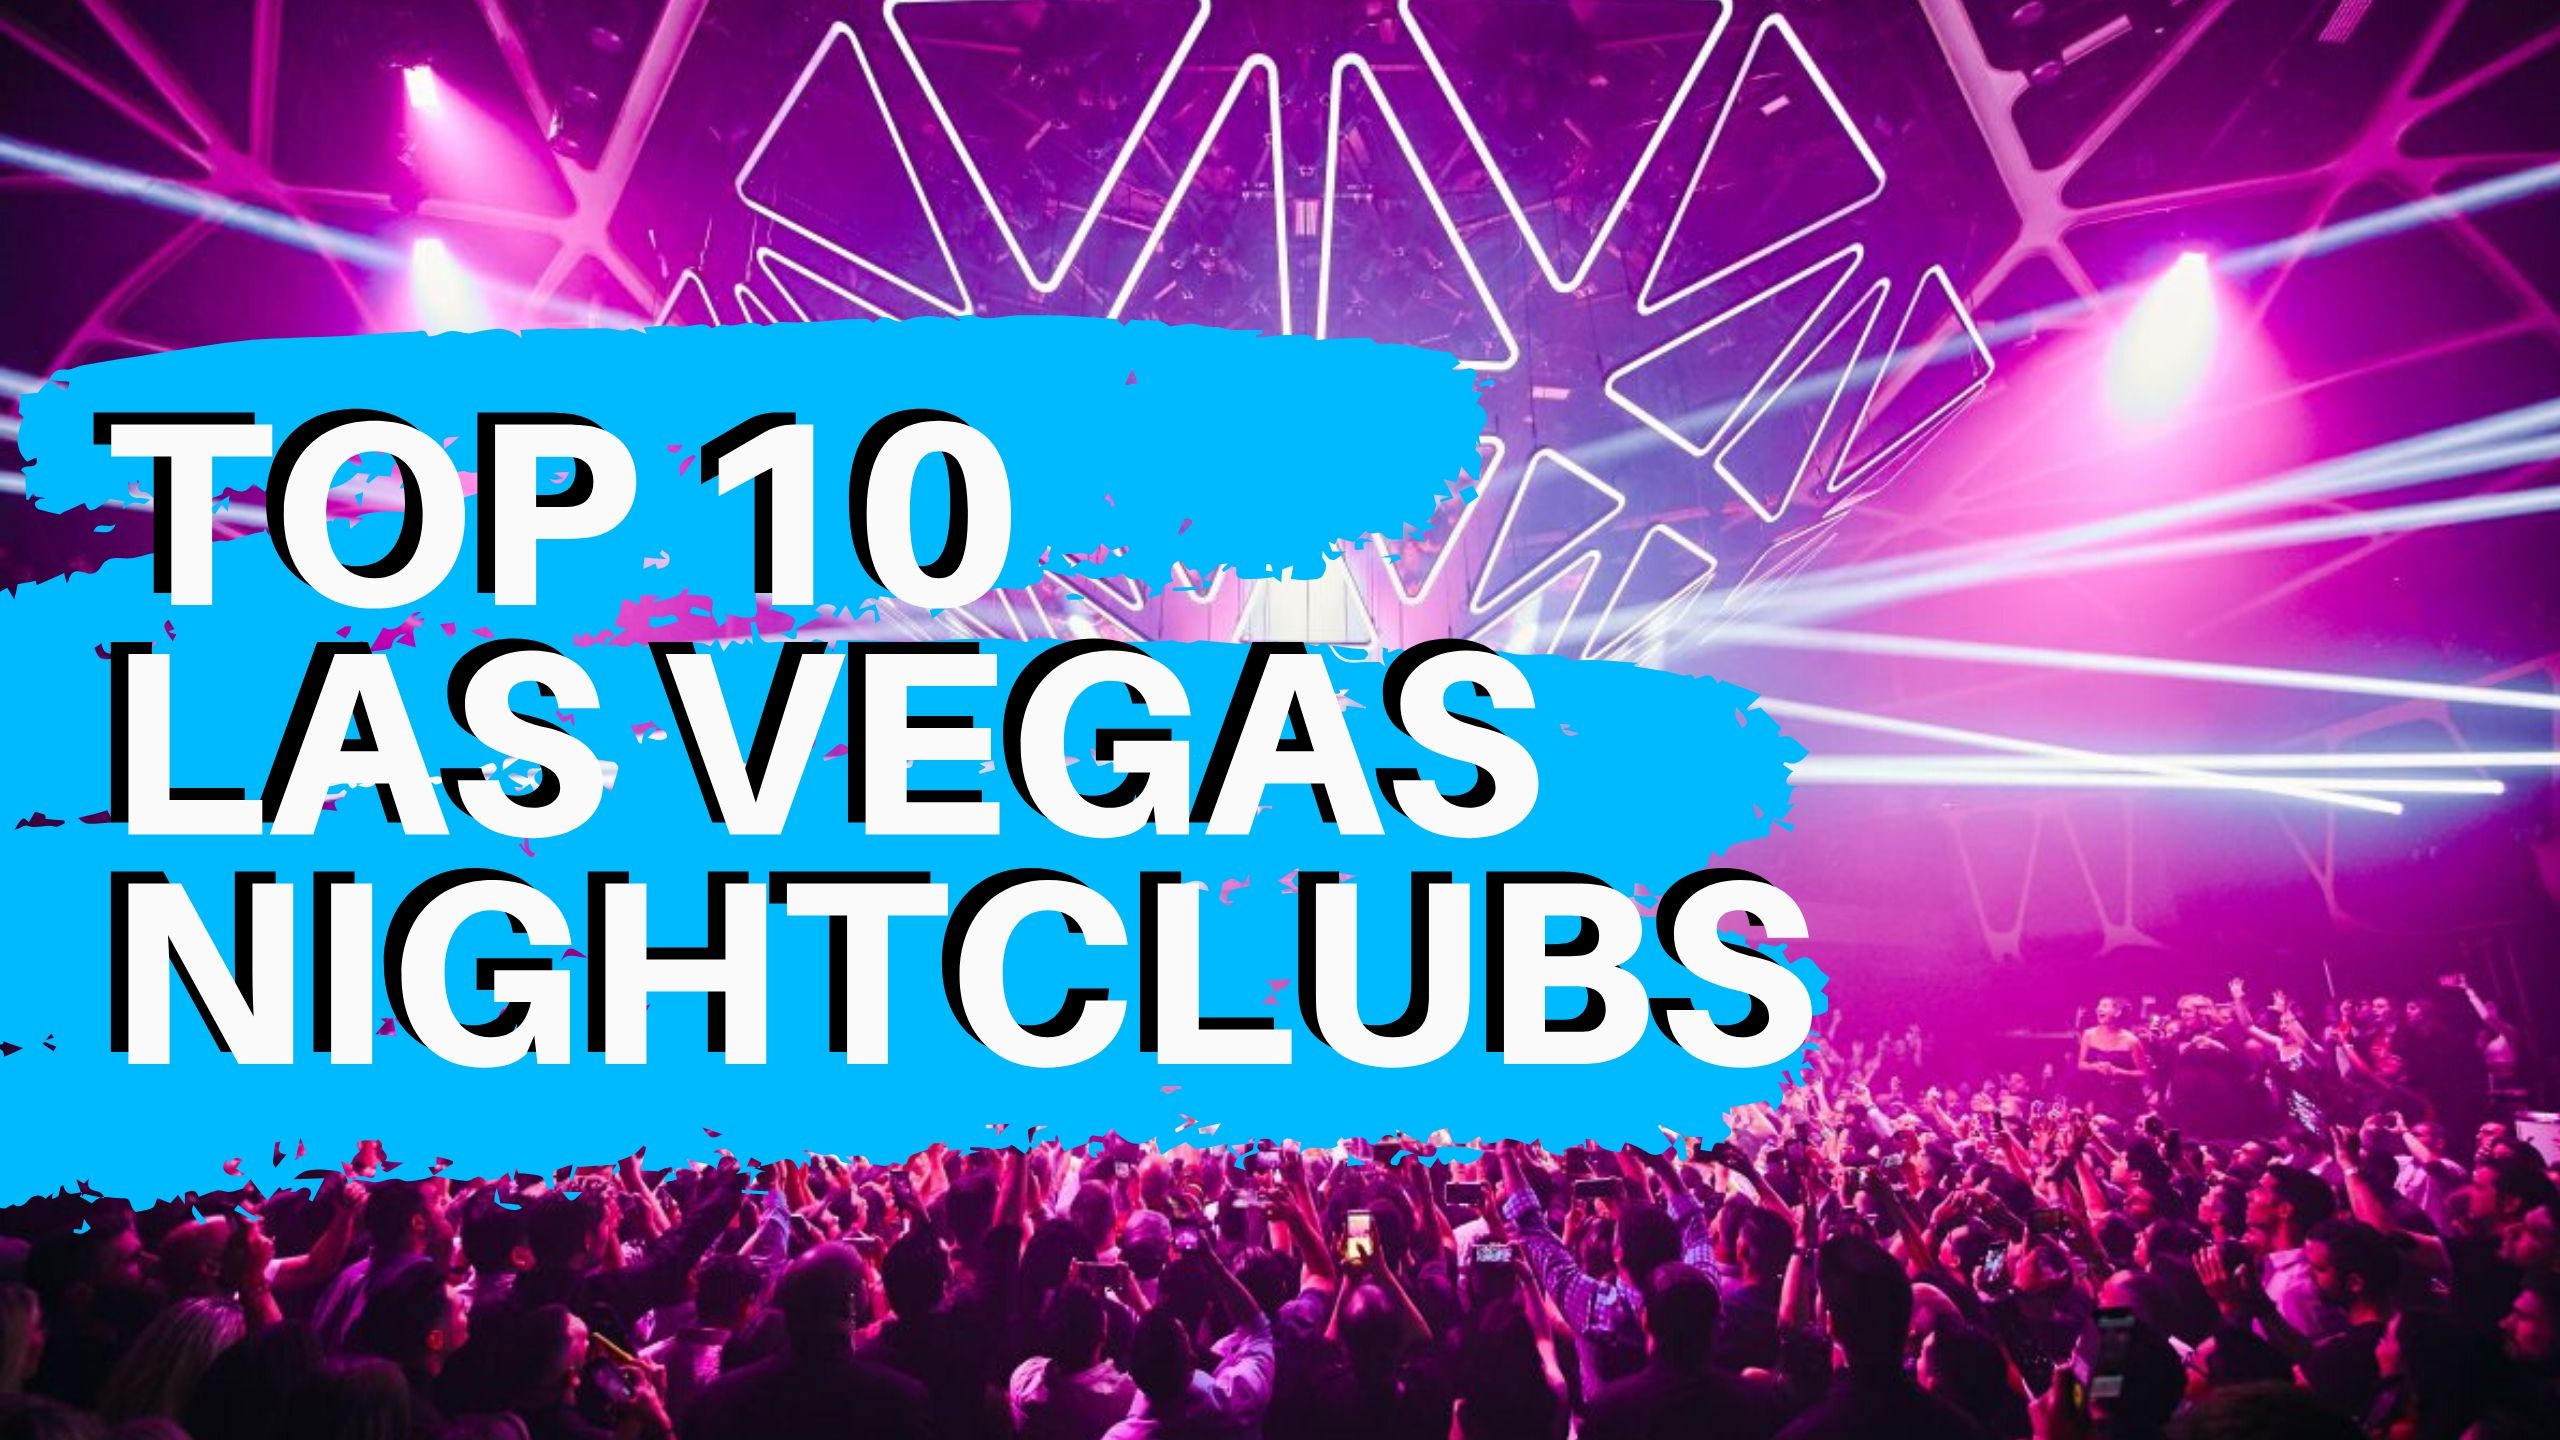 10 Best Nightclubs in Las Vegas, Nevada + MAP